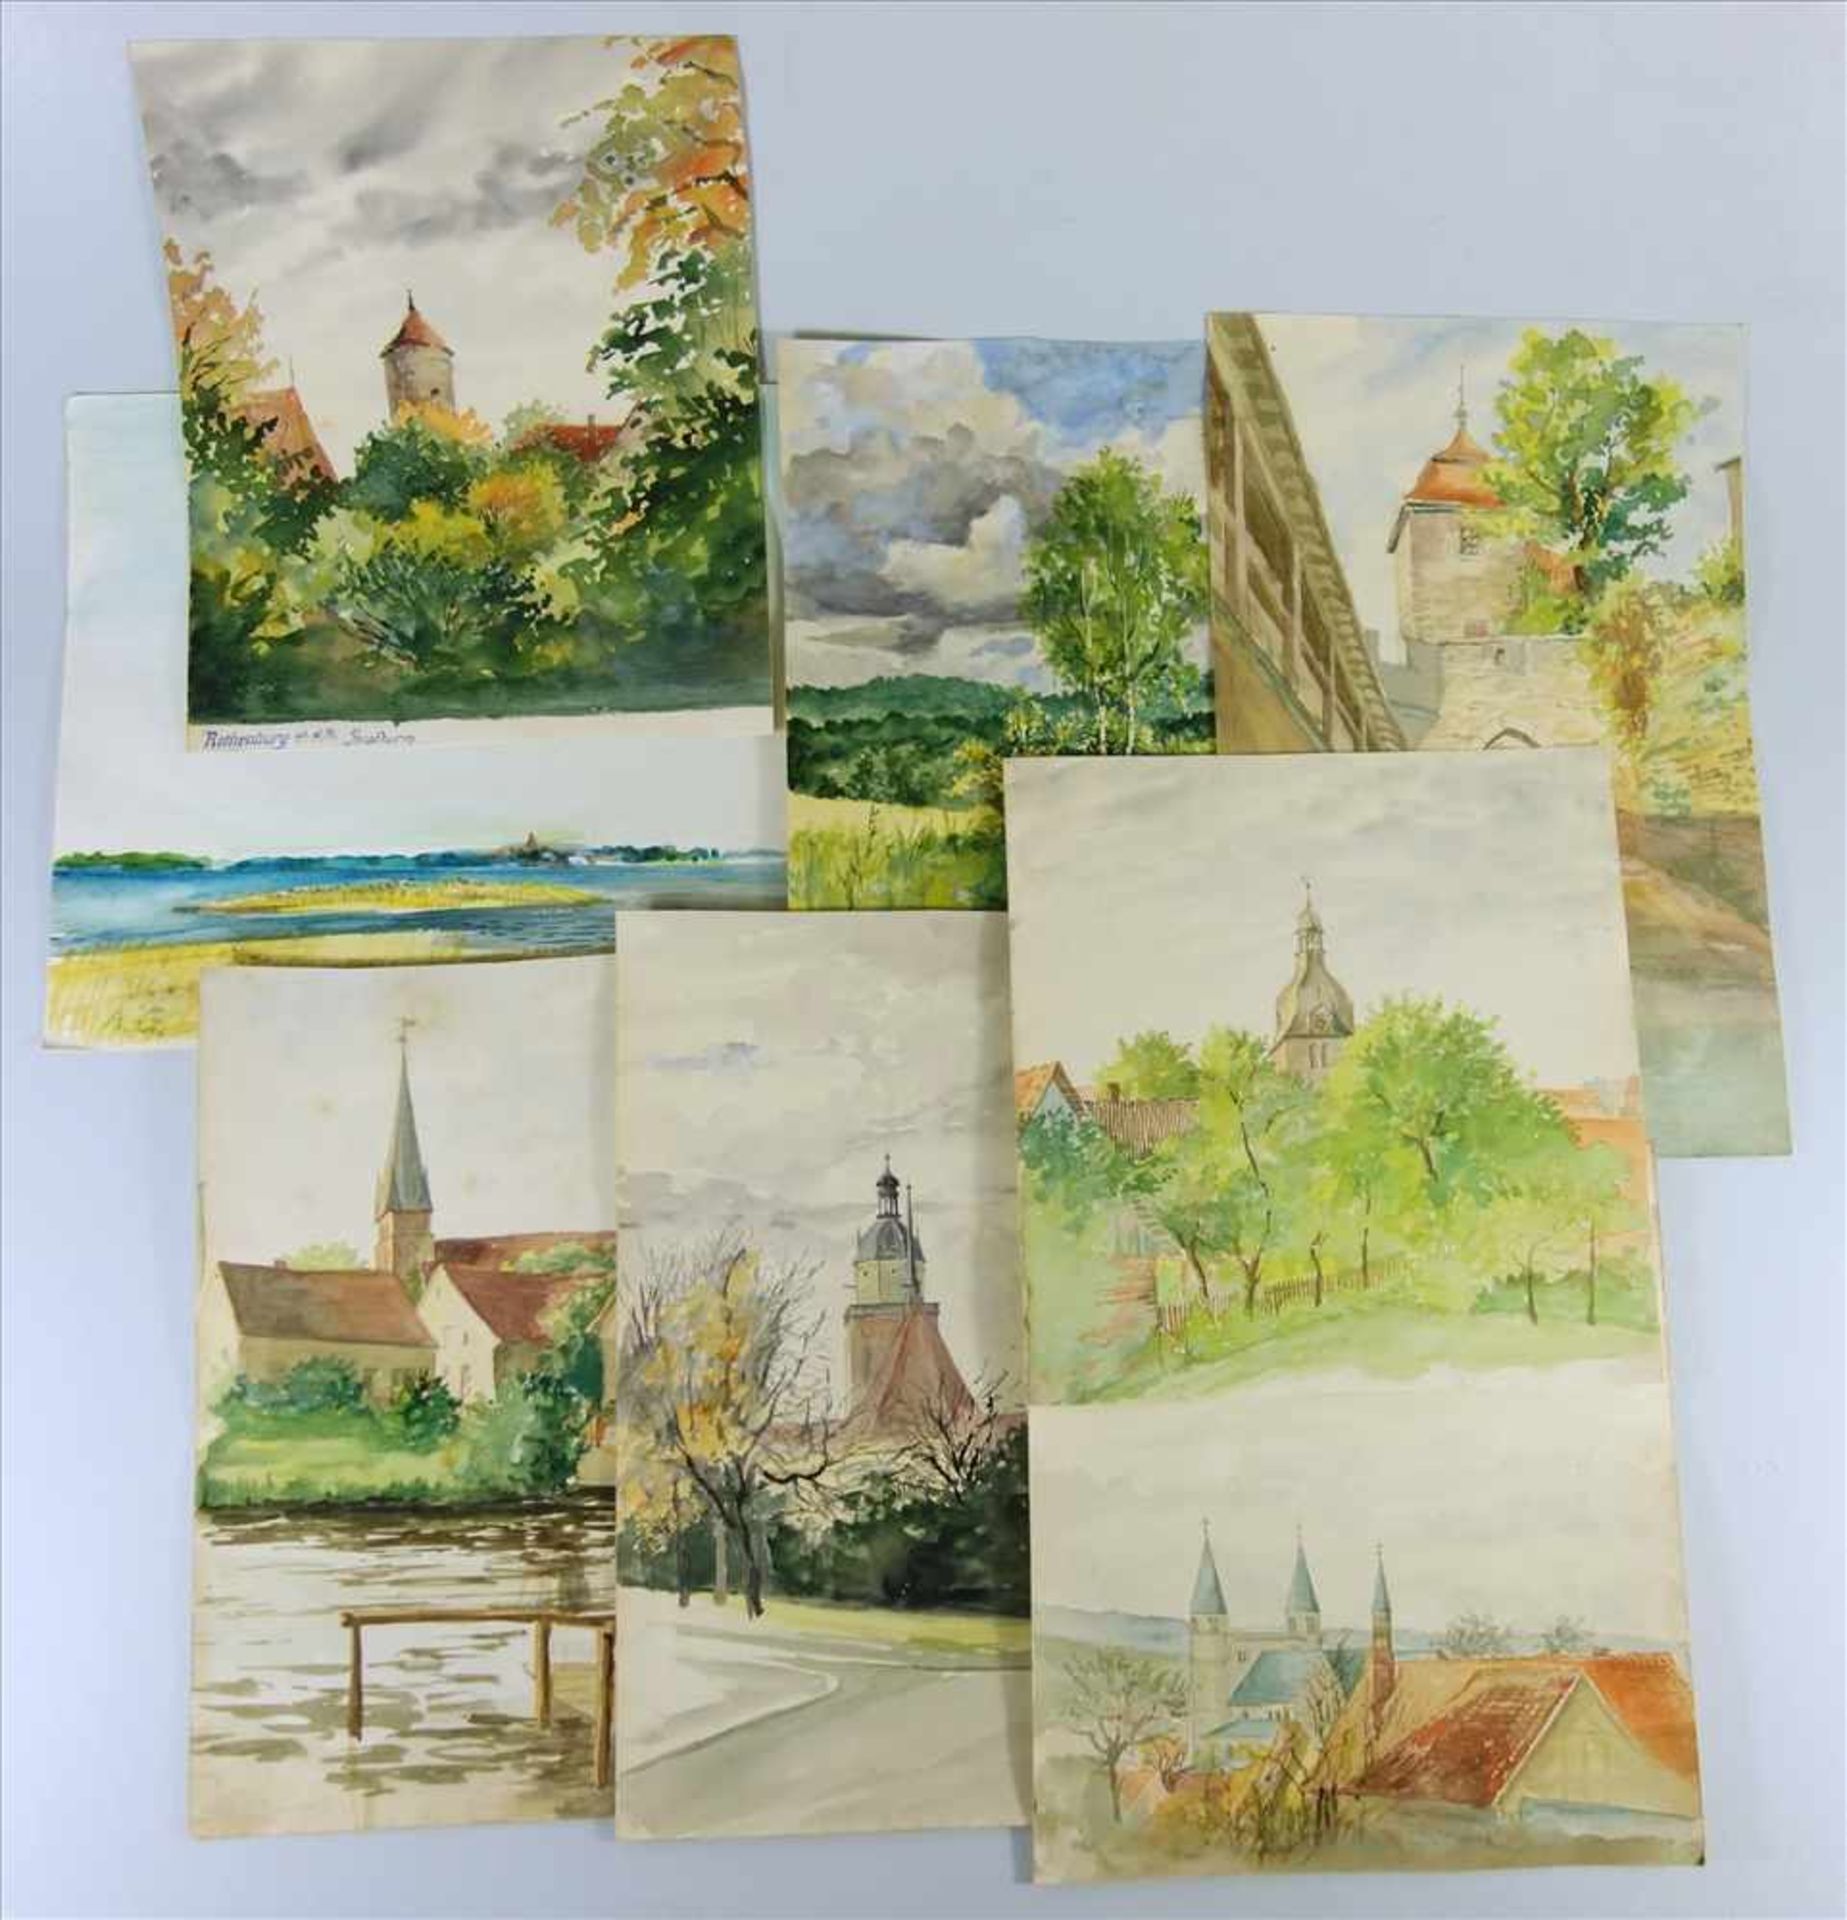 unbekannter Maler, 9 Aquarelle mit versch. Stadtansichten, u.a. Schloßkirche in Dessau, Schulturm in